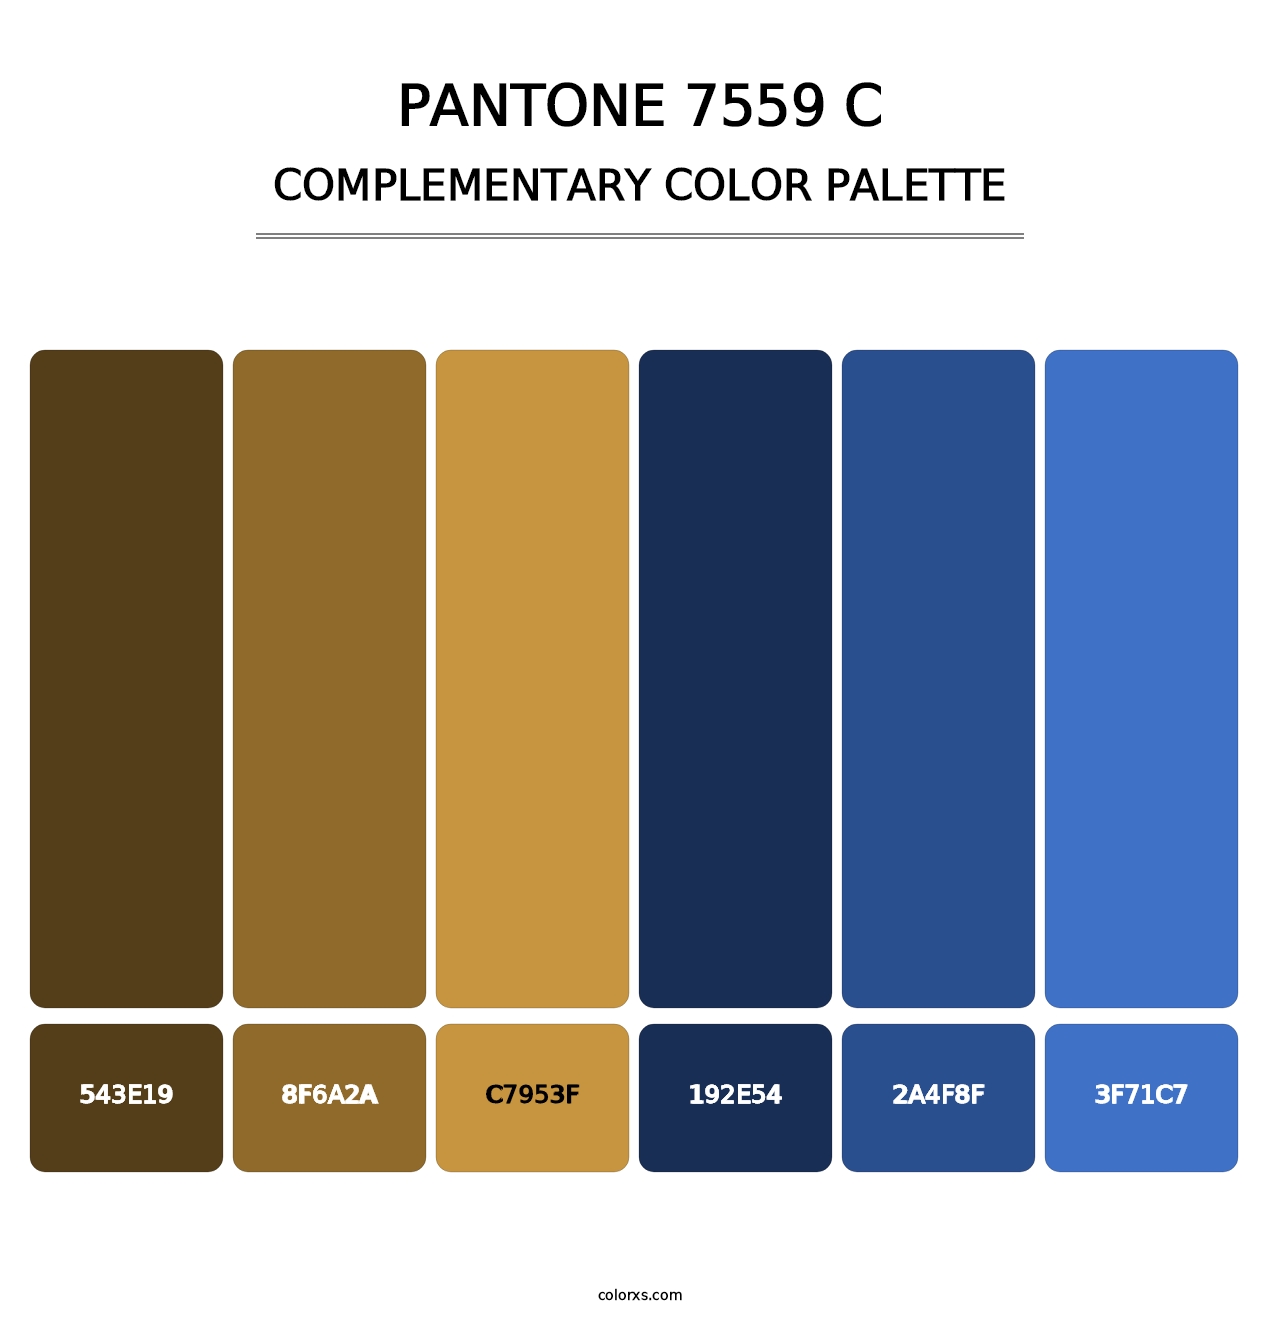 PANTONE 7559 C - Complementary Color Palette